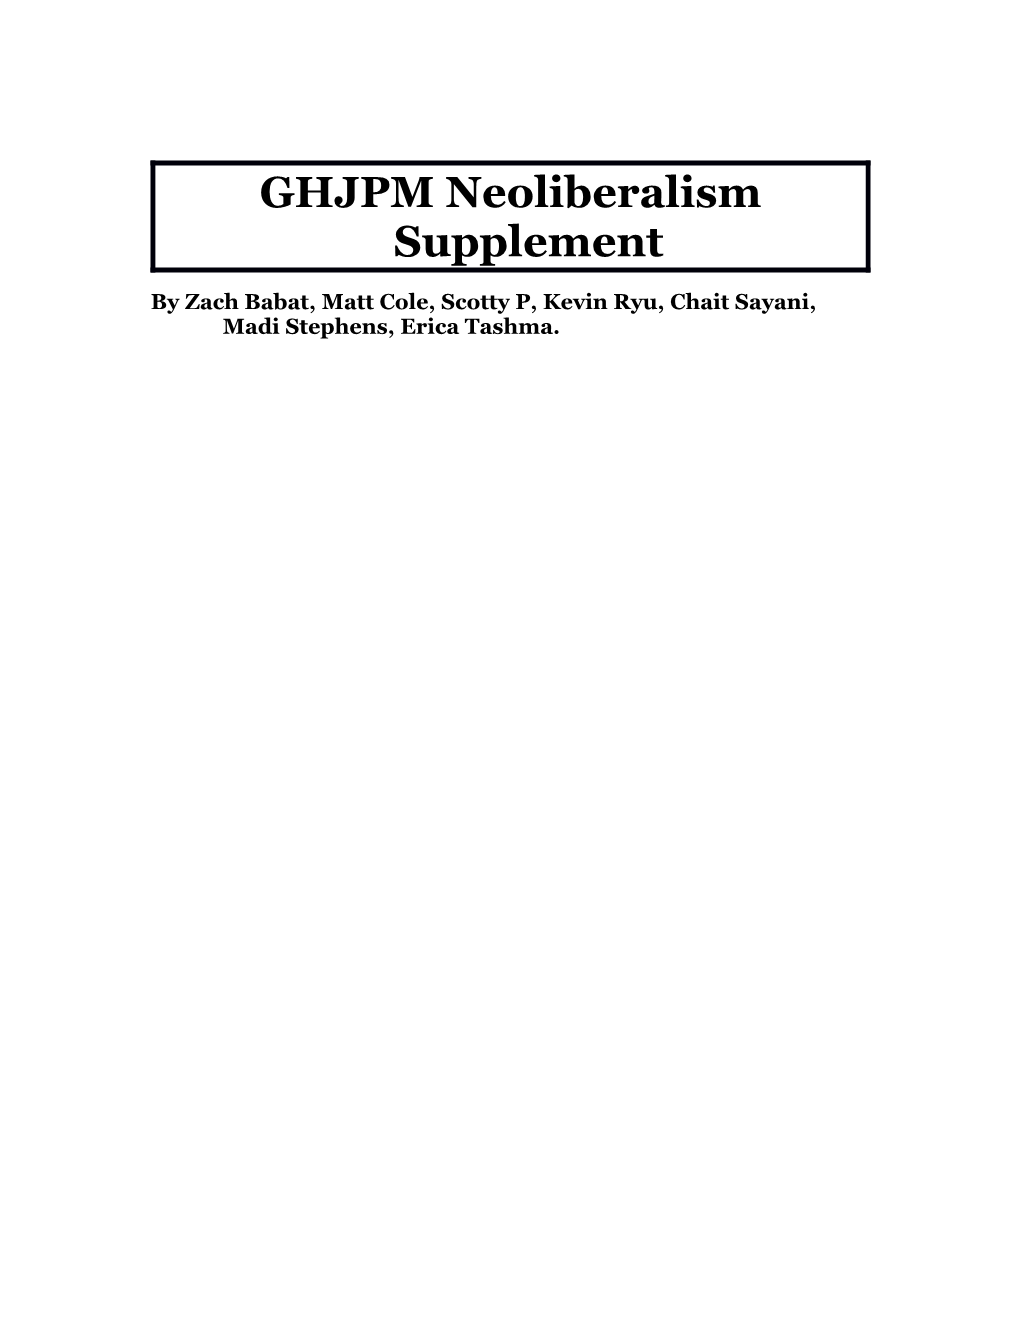 GHJPM Neoliberalism Supplement